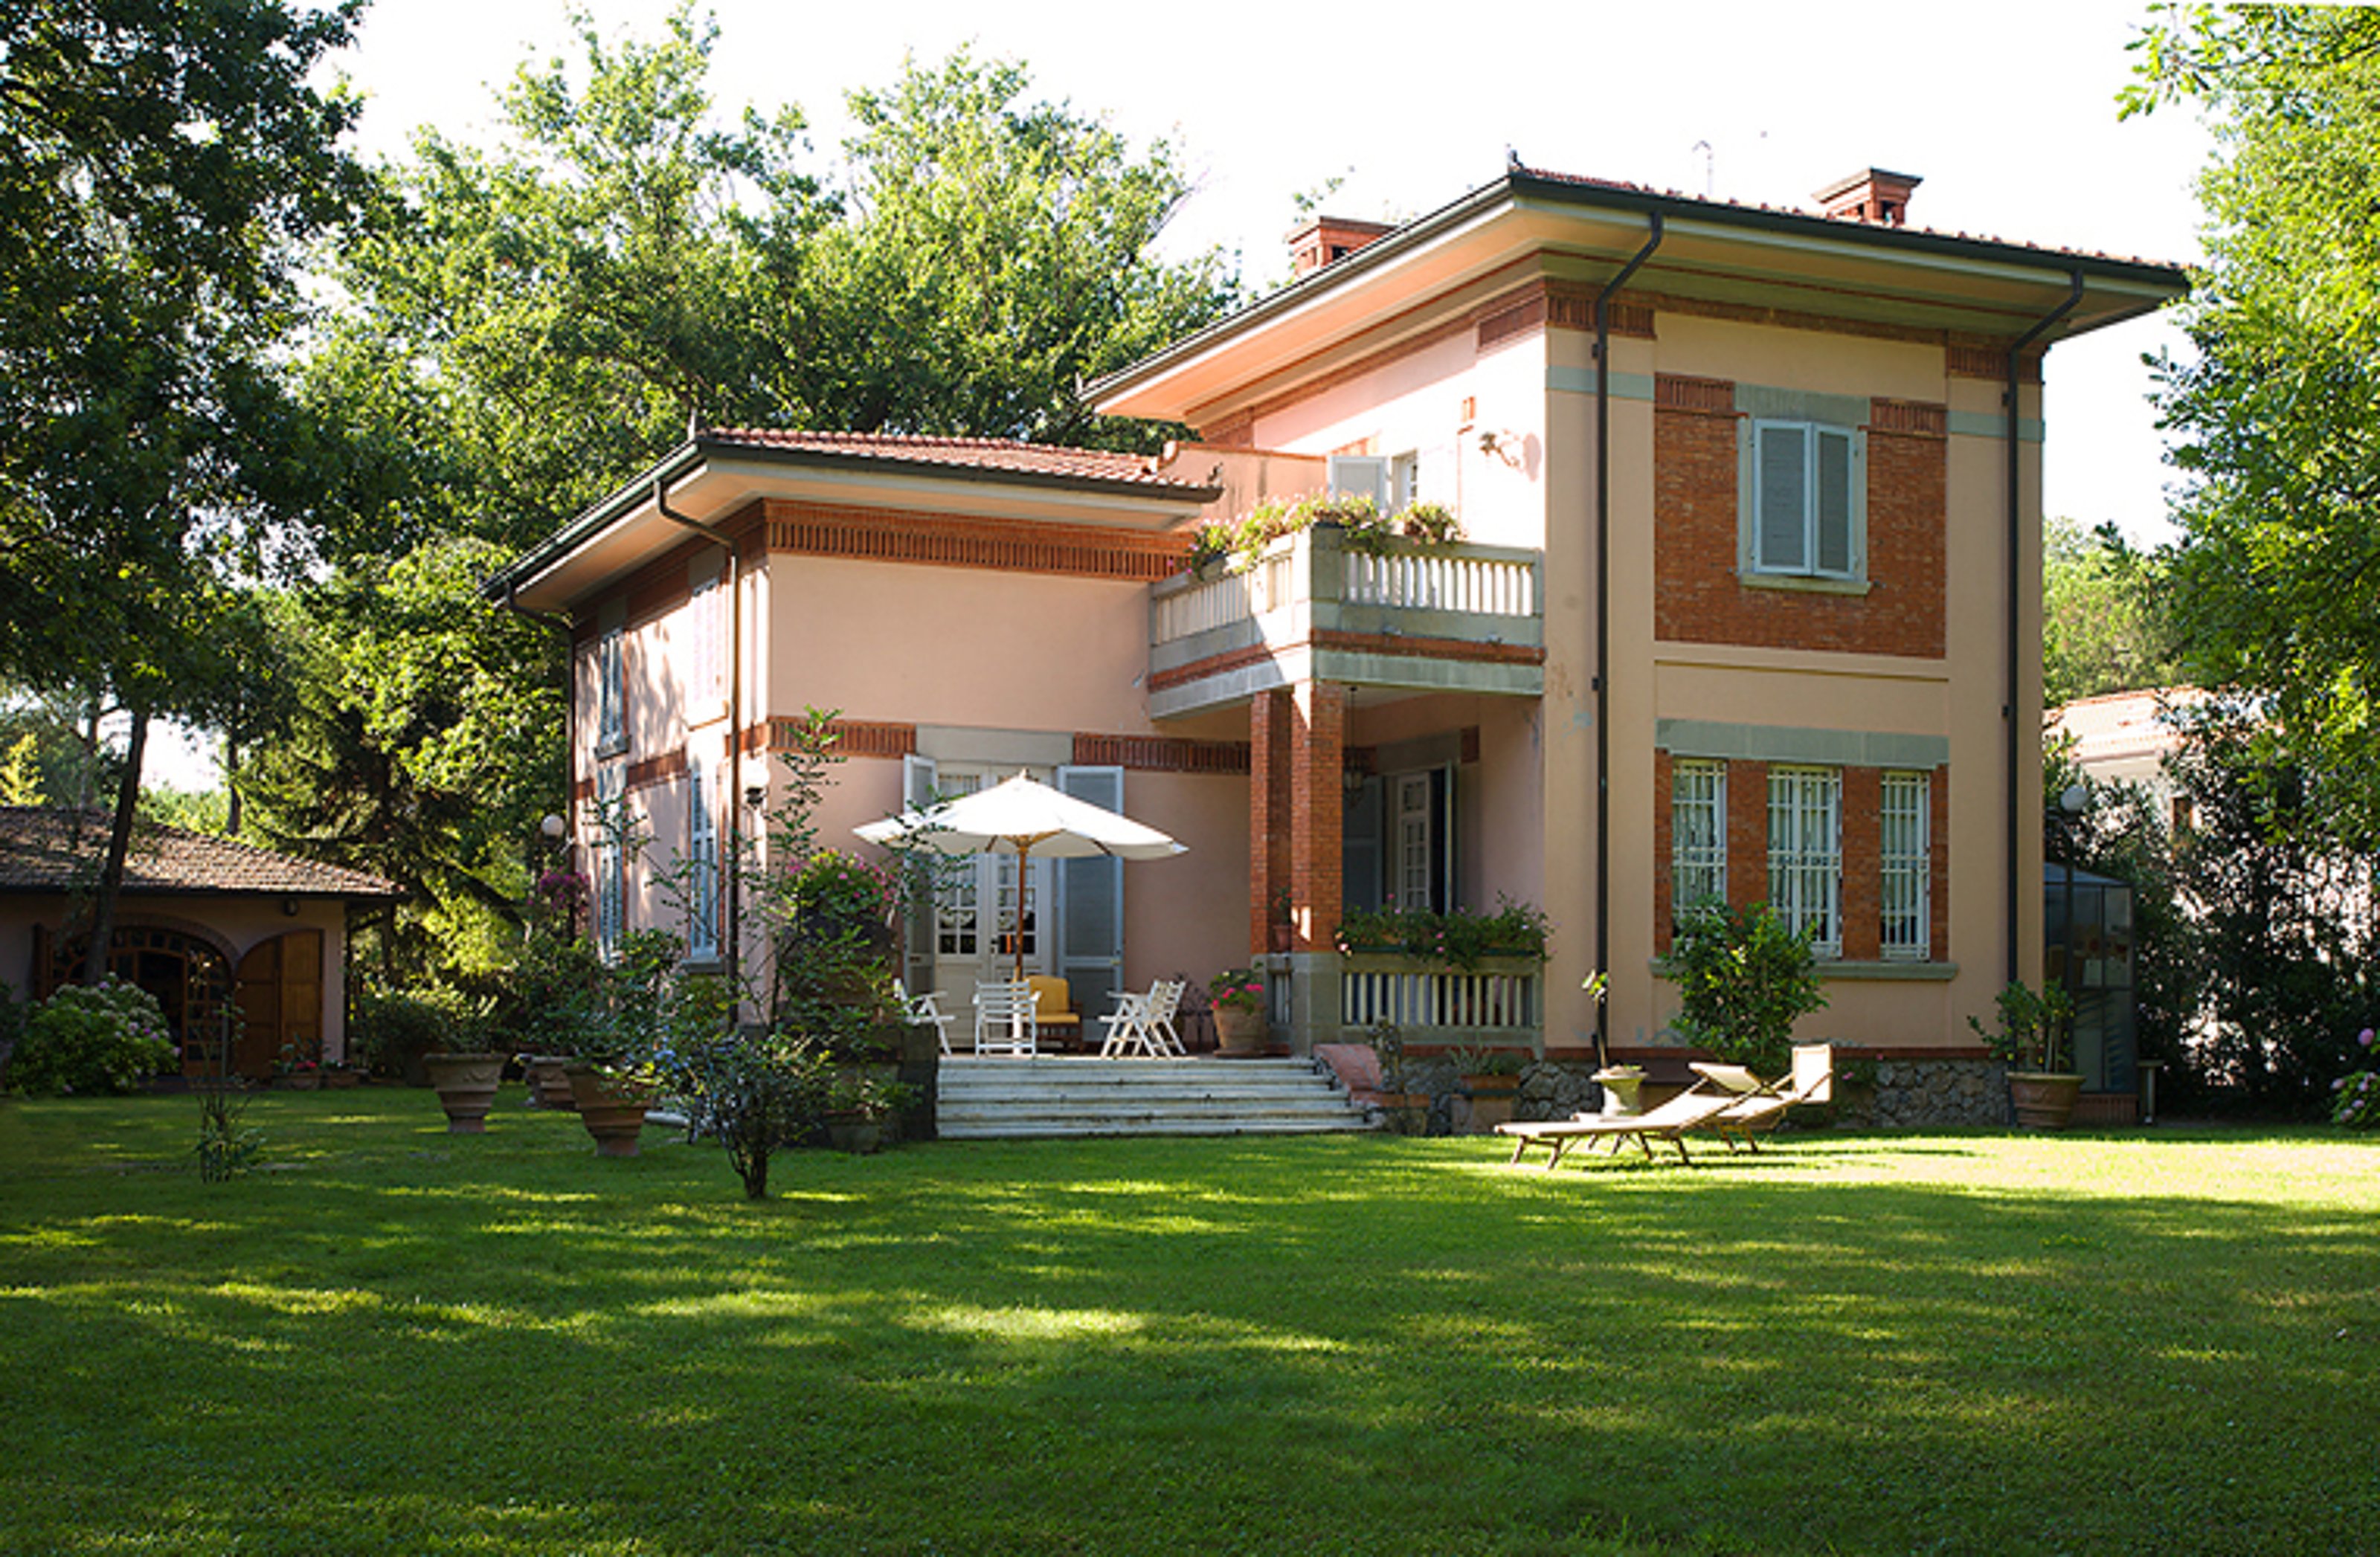 A two-storey villa with a cream-colored green grassy garden.